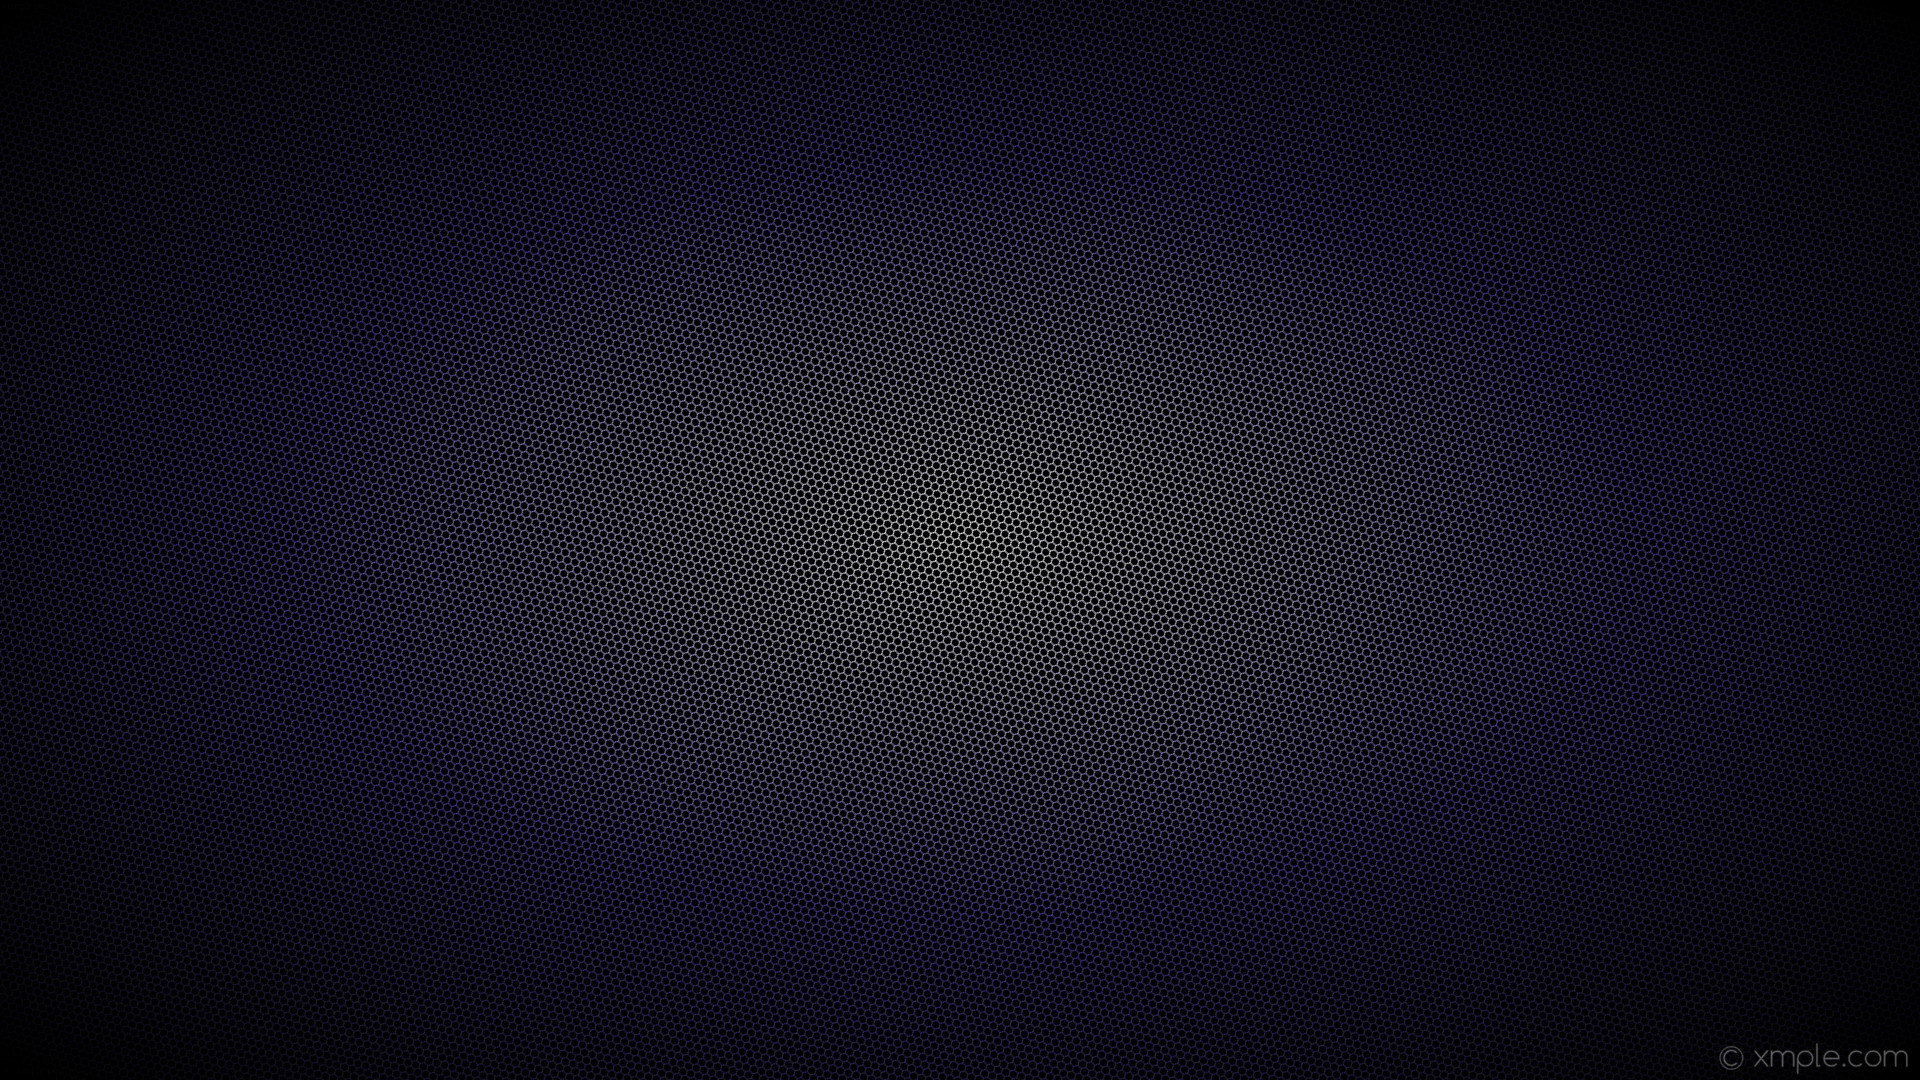 1920x1080 wallpaper black white hexagon purple glow gradient dark slate blue #000000  #ffffff #483d8b